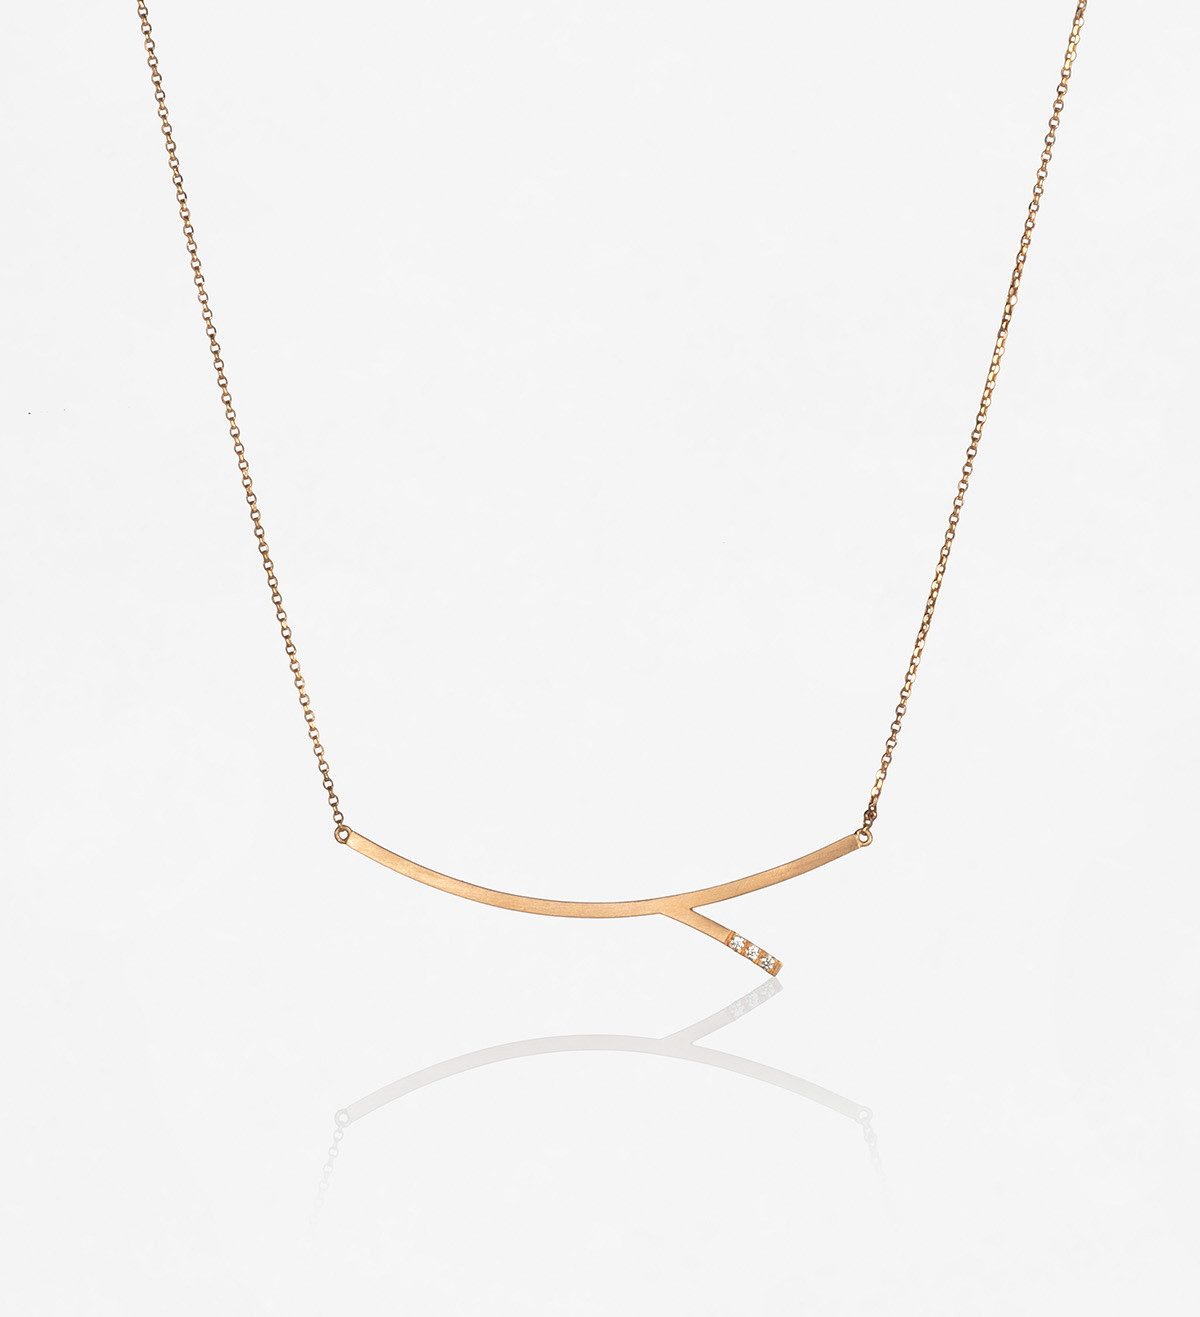 18k rose gold necklace Feel diamonds 0,021ct 45cm